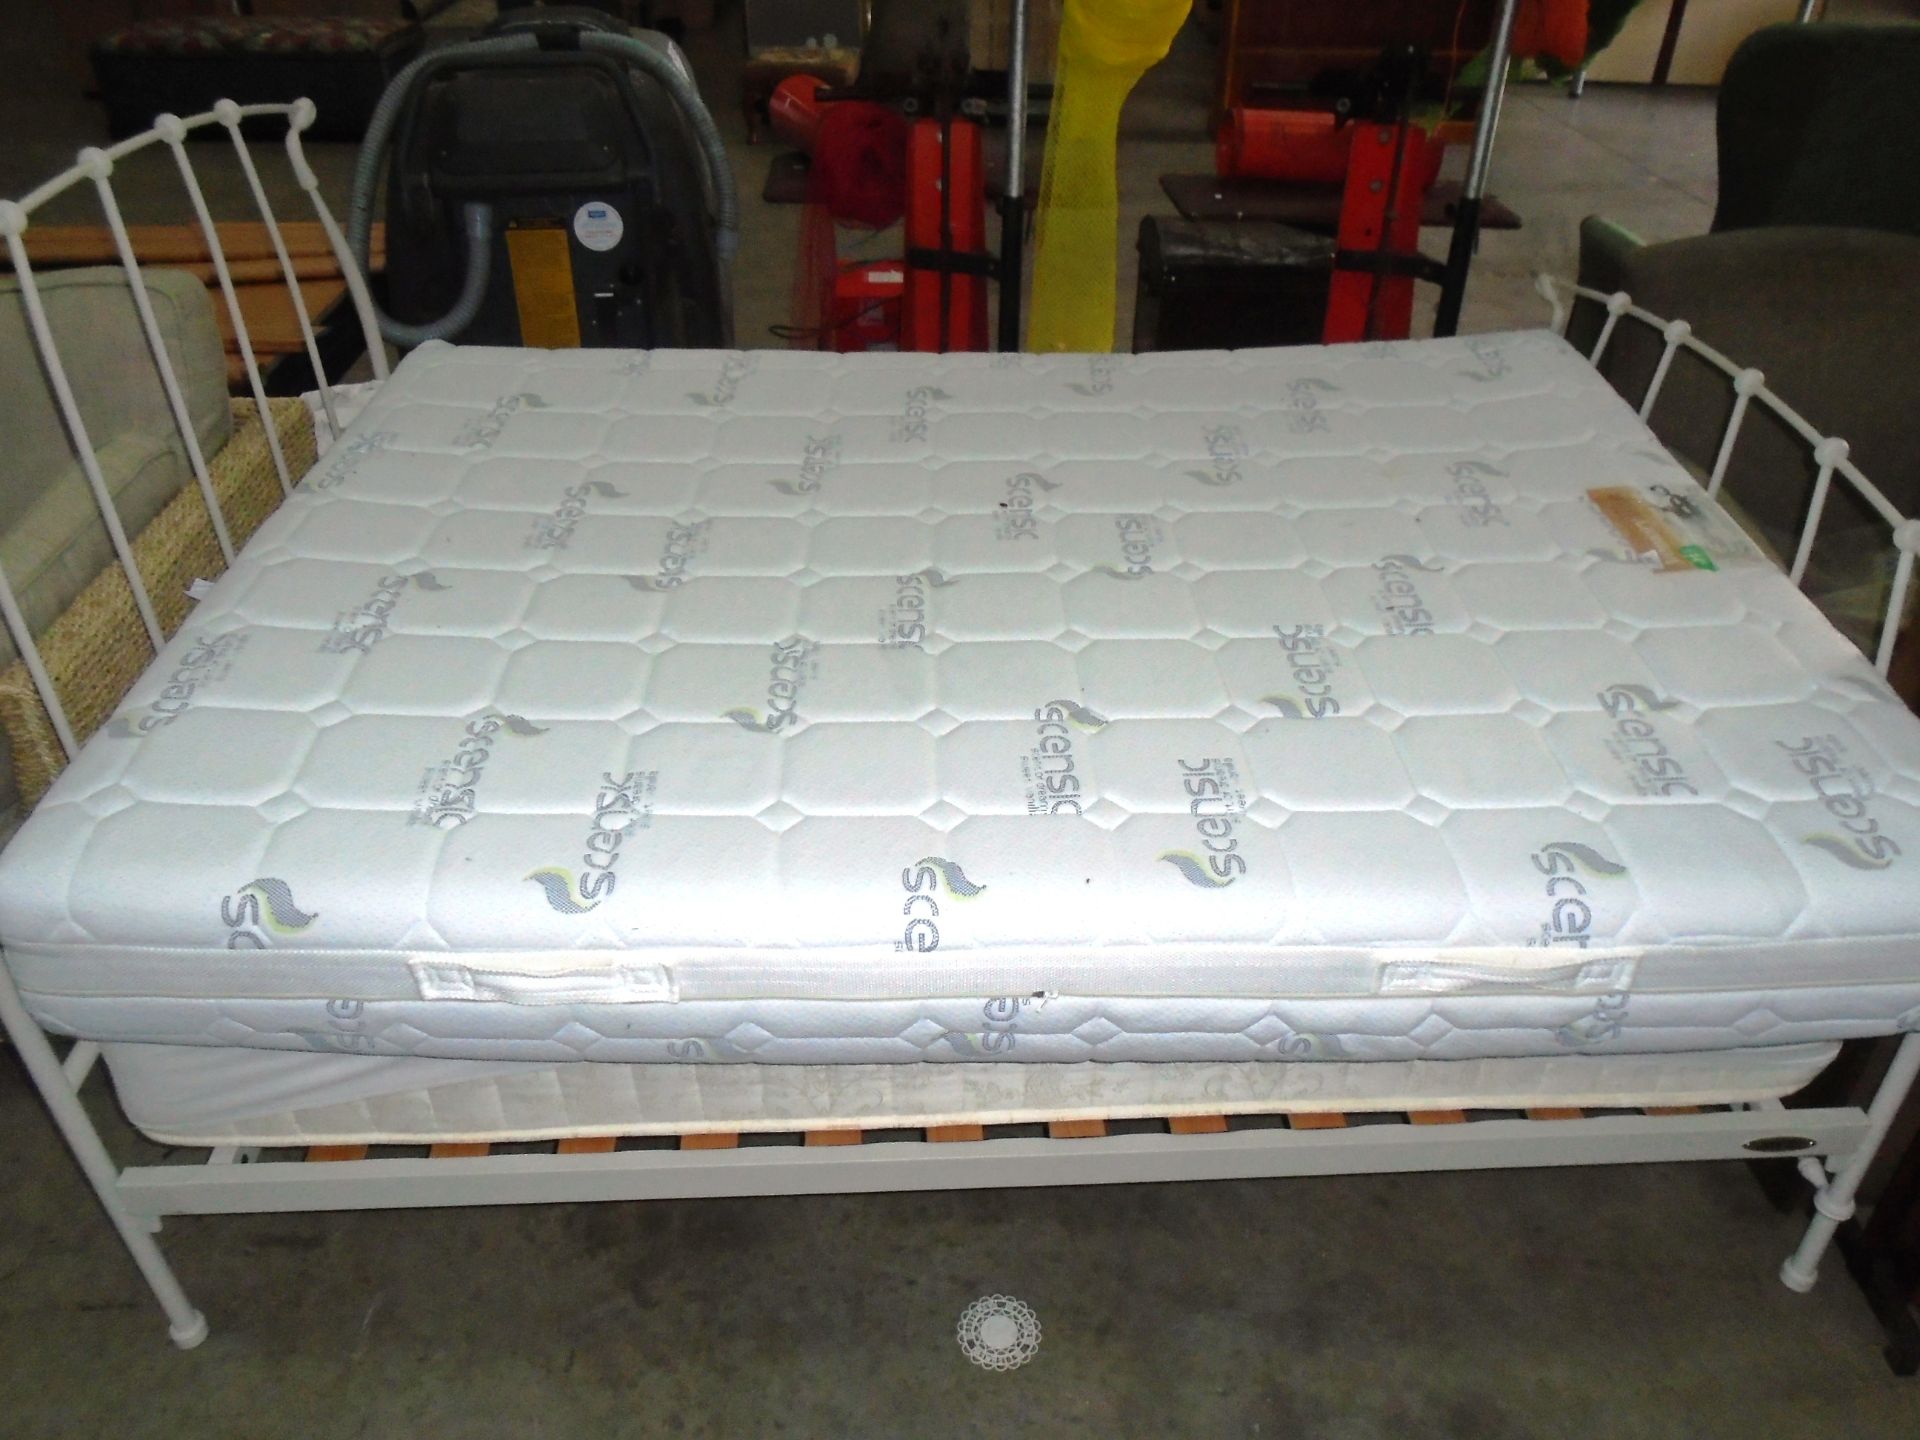 A Universal Memory Ultra luxury memory foam 4'6"" mattress with Bio Foam core